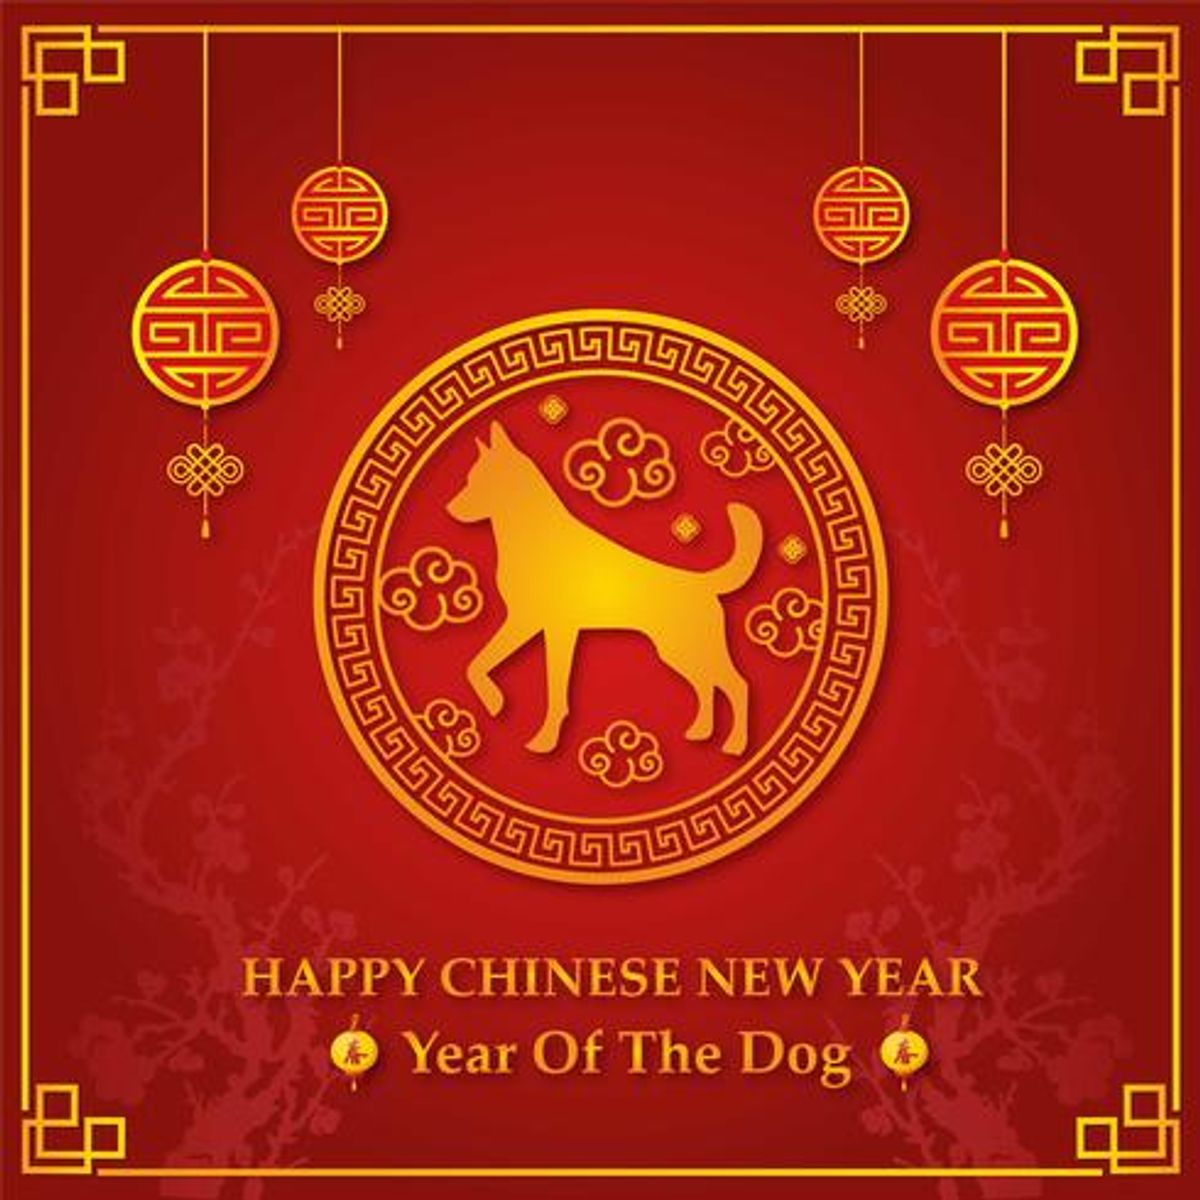 HAPPY Chinese New Year 2018!